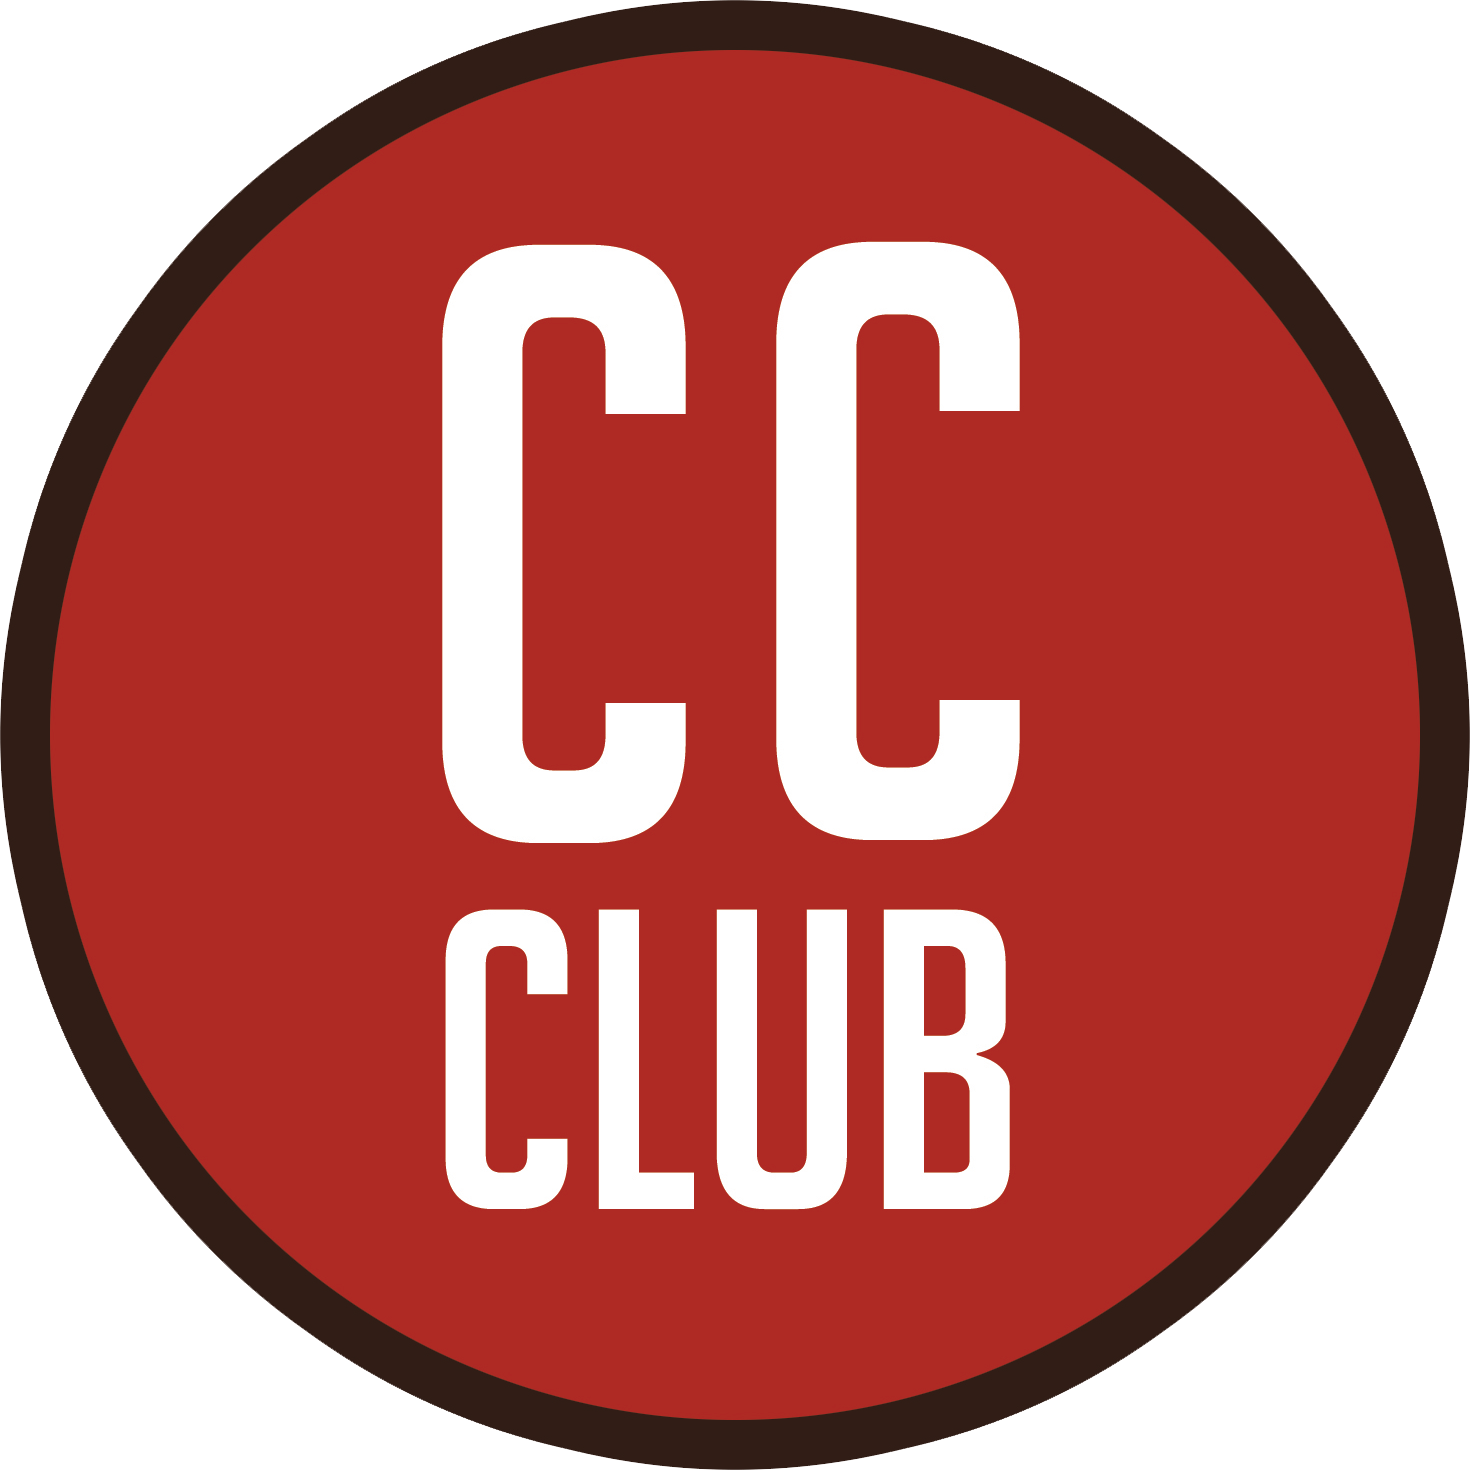 CC-club-Logo-float.png